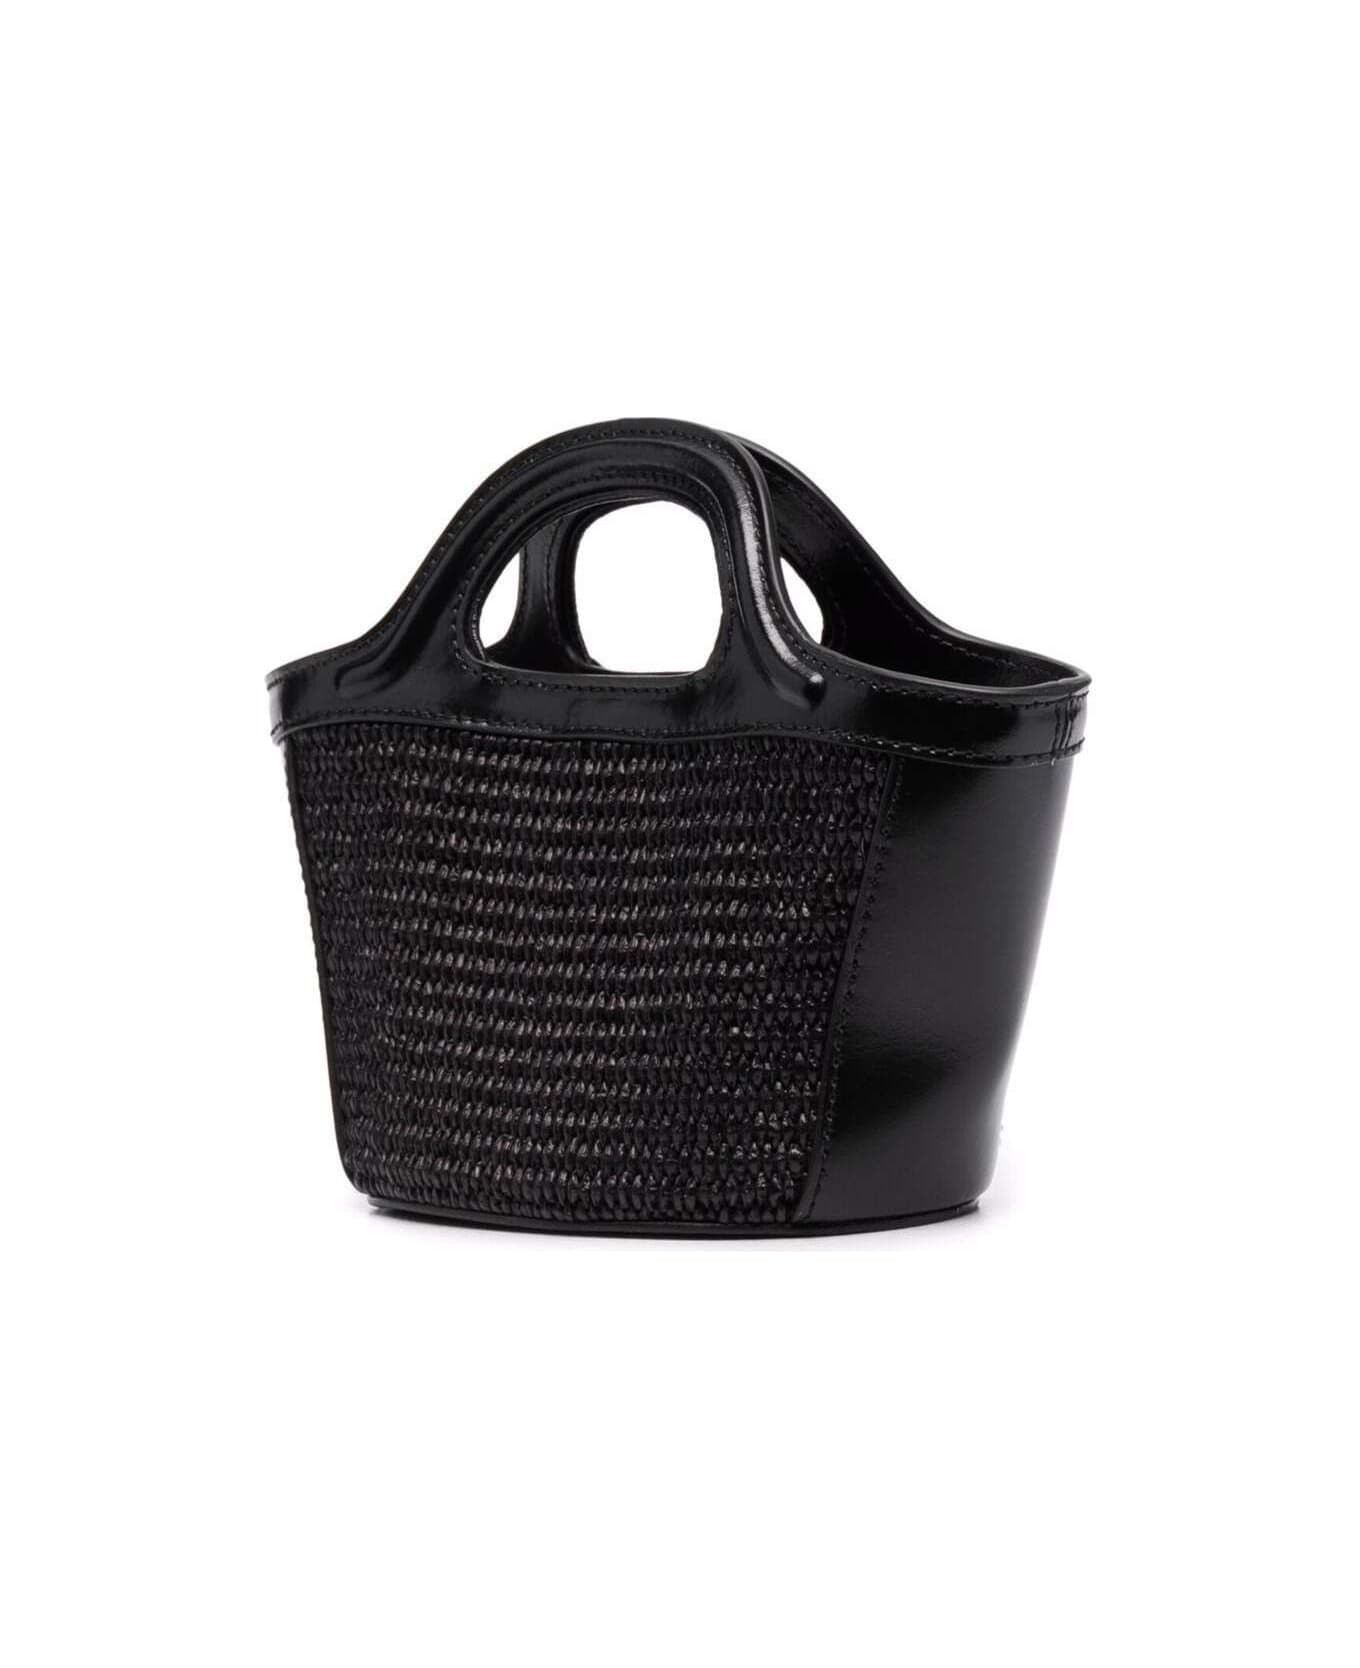 Marni 'tropicalia Micro' Black Handbag With Logo Lettering Detail In Leather And Rafia Effect Fabric Woman - Black